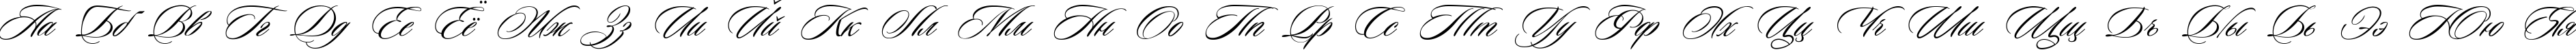 Пример написания русского алфавита шрифтом Ceremonious One